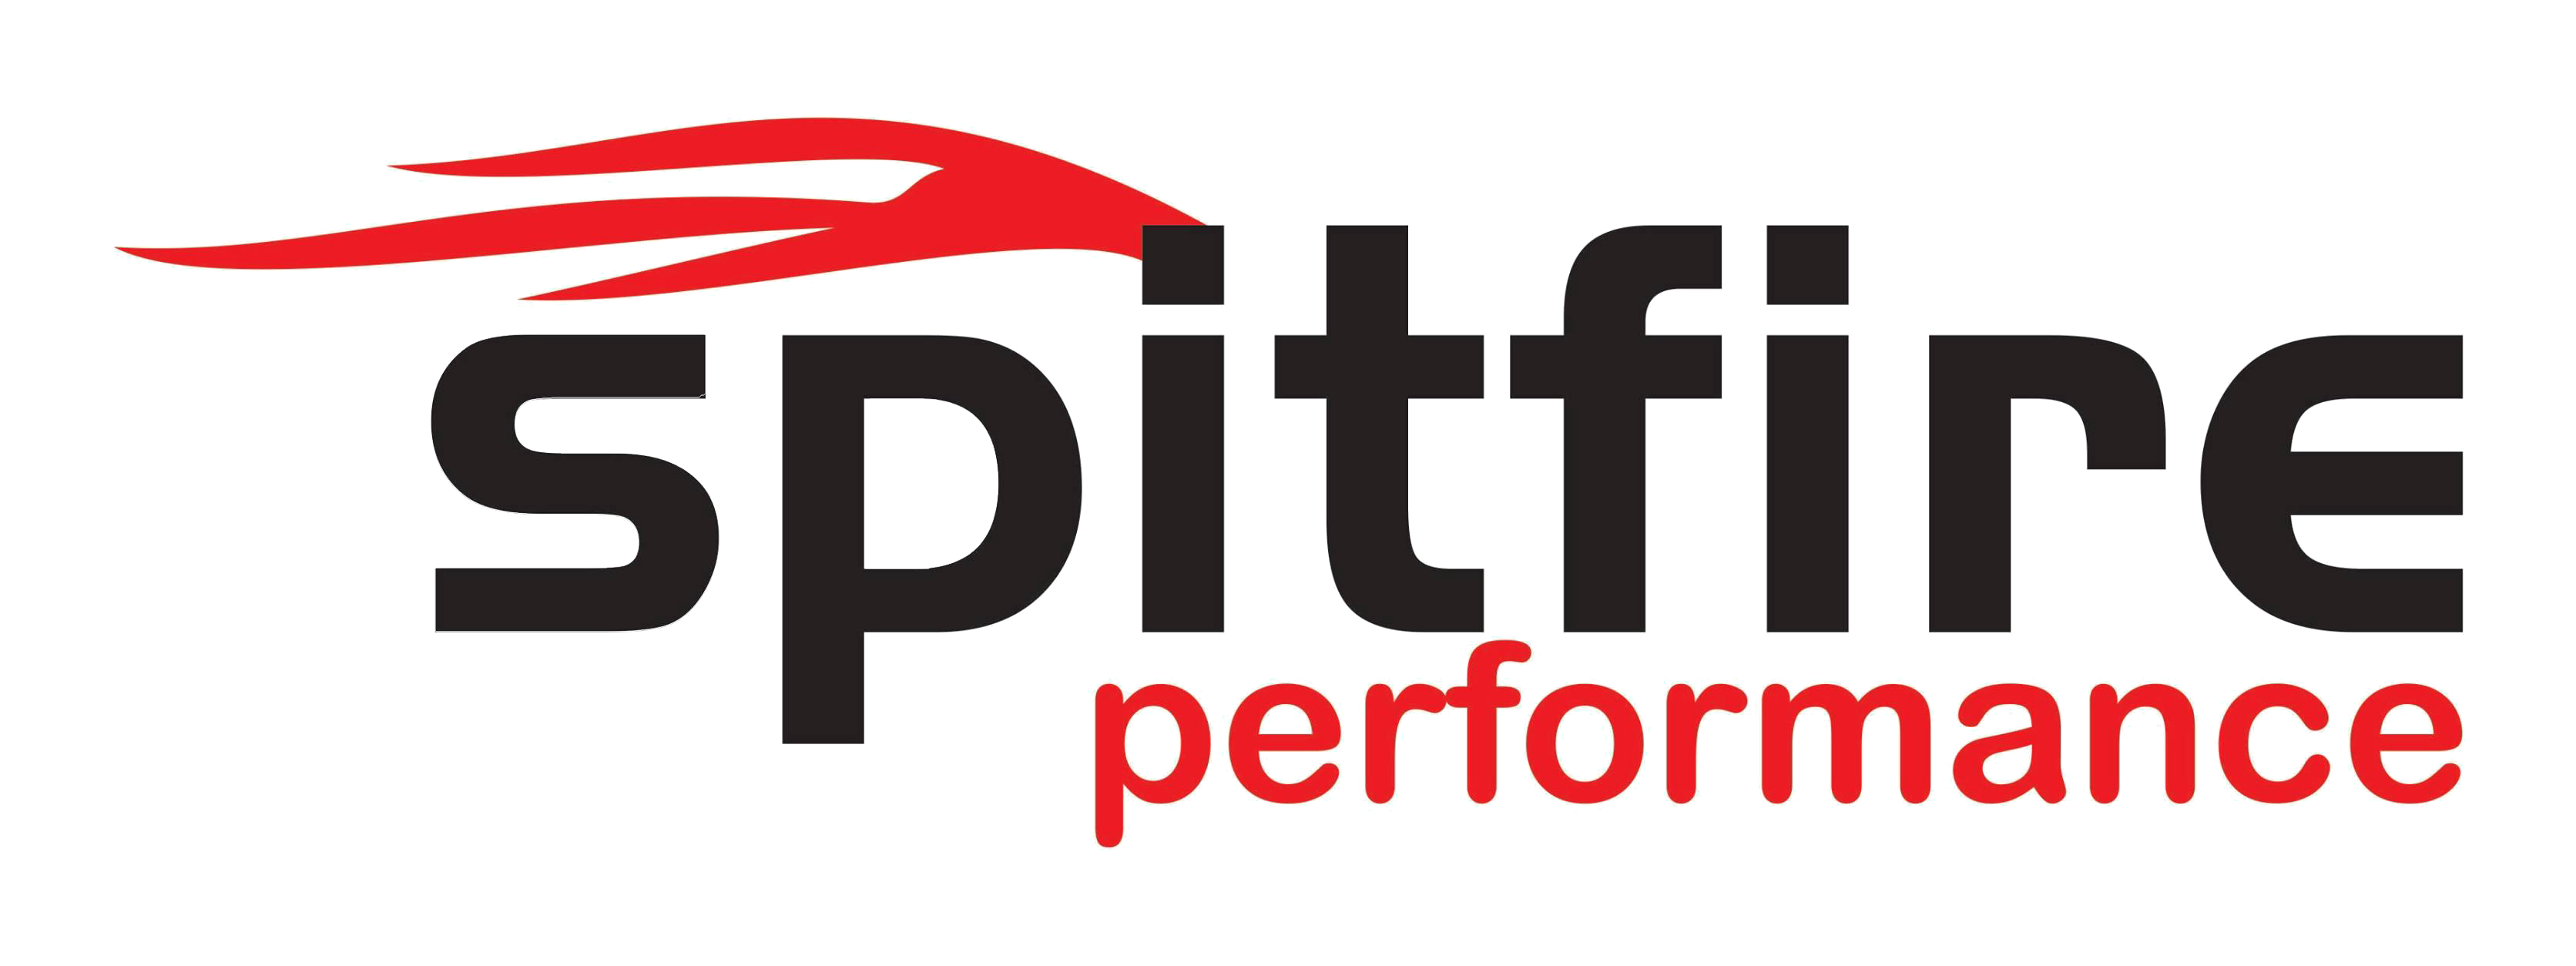 Spitfire_logo